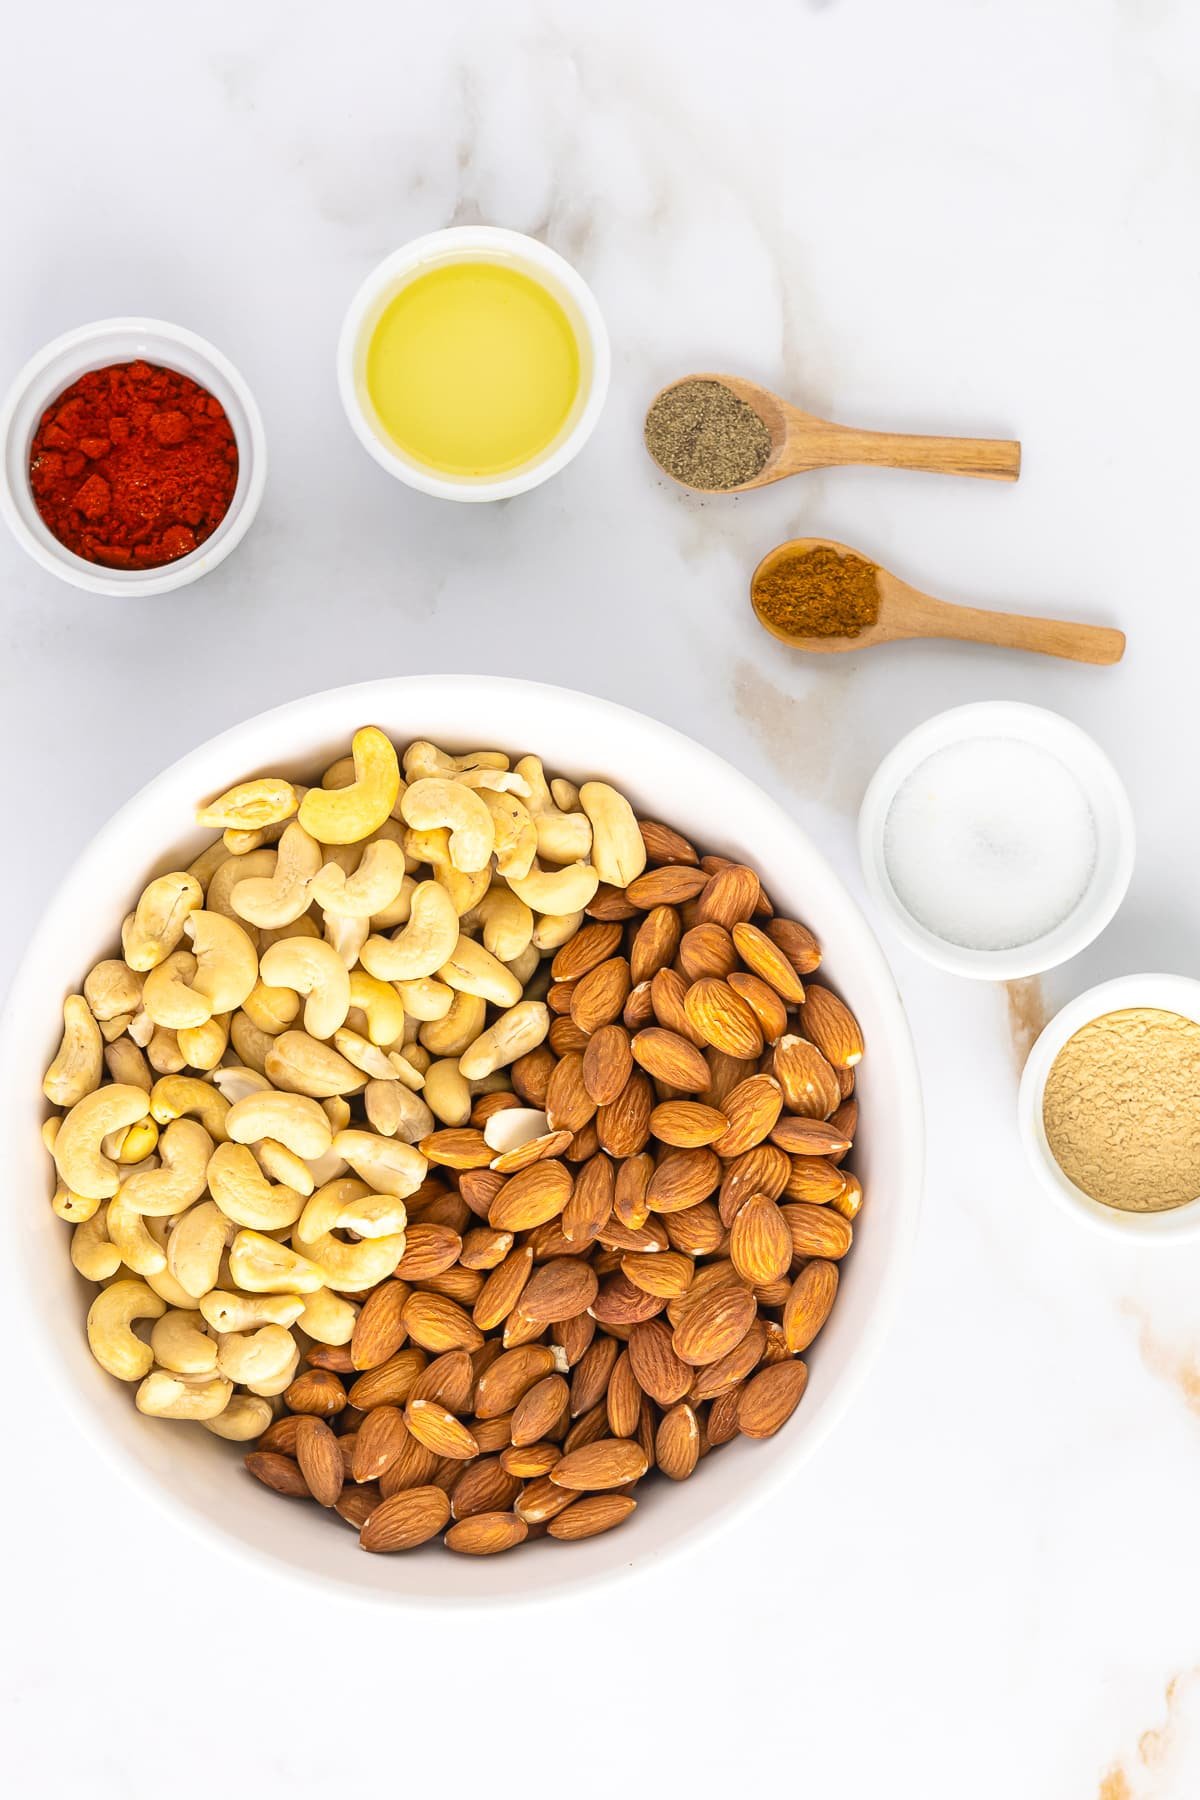 ingredients needed to make roasted nuts